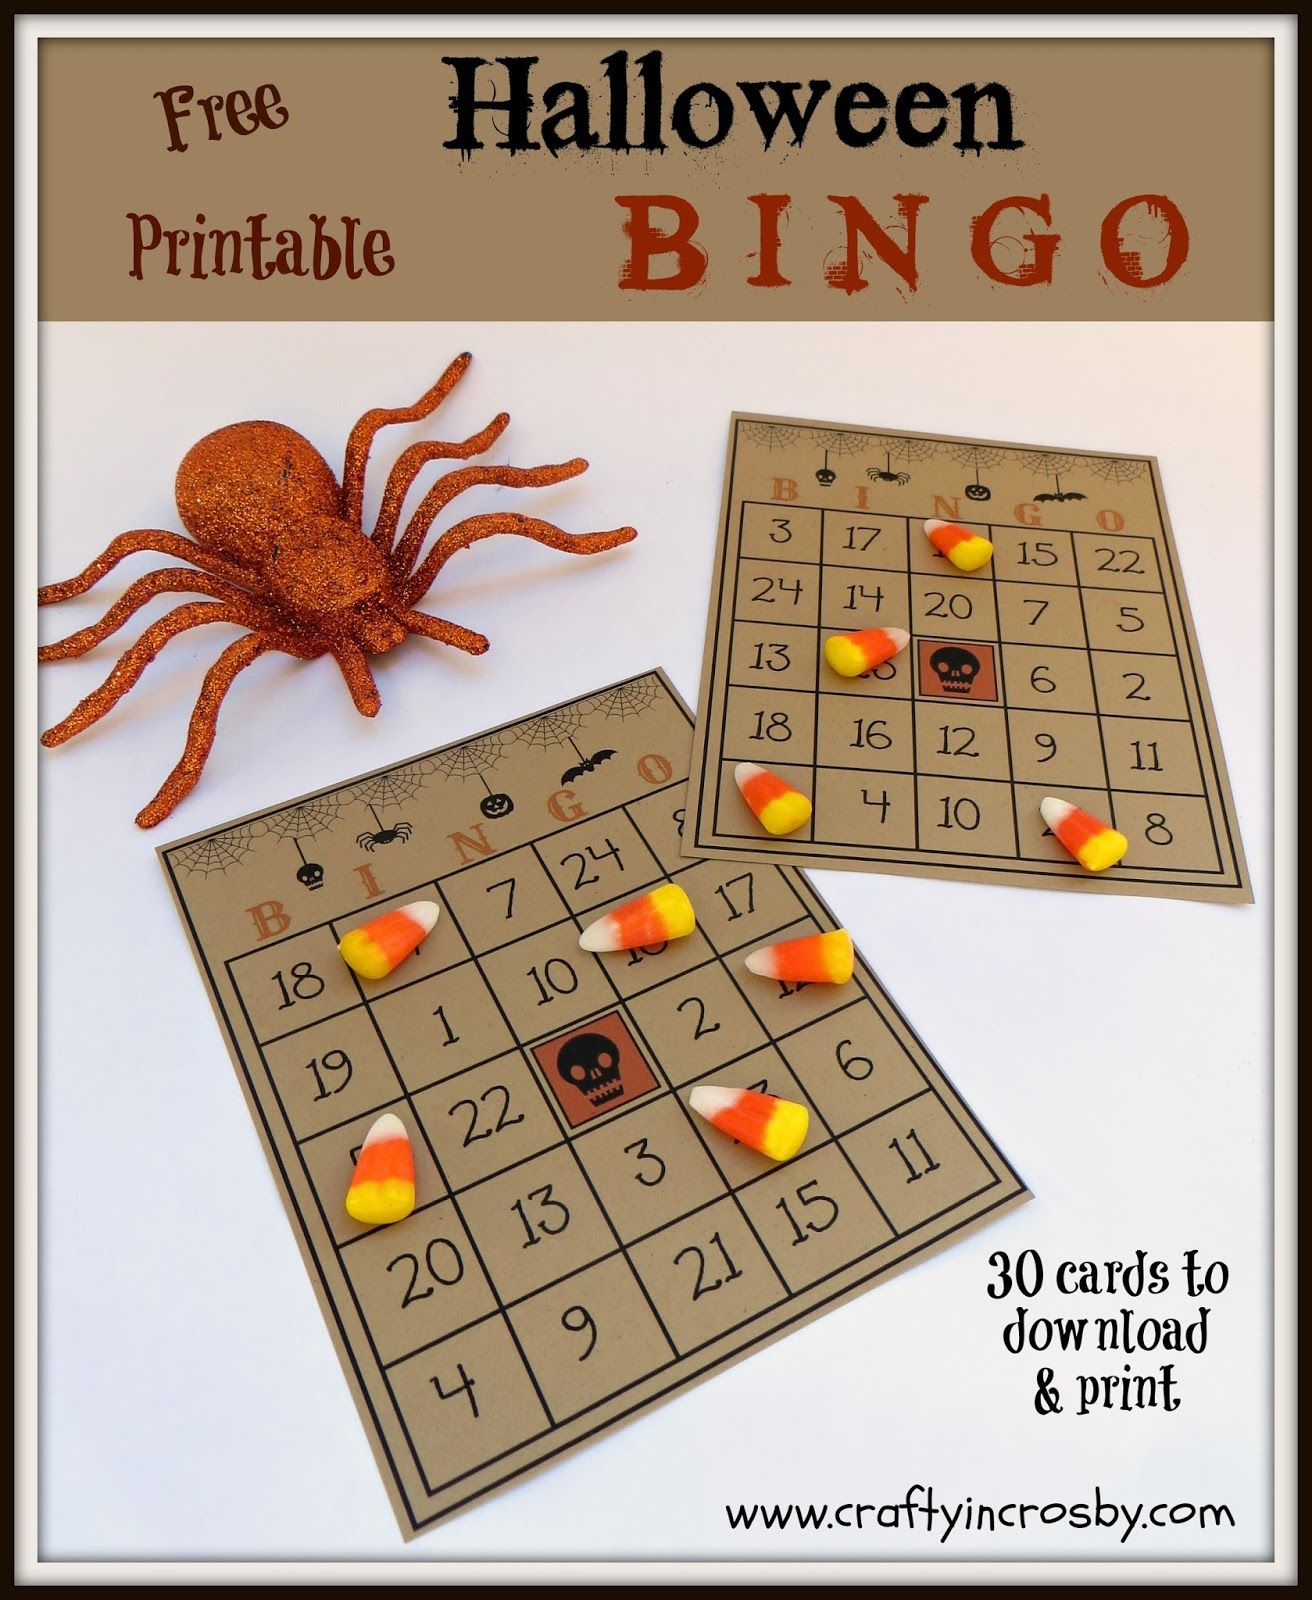 Free Printable Halloween Bingo Game With 30 Cards, Call Sheet And - Free Printable Bingo Cards And Call Sheet